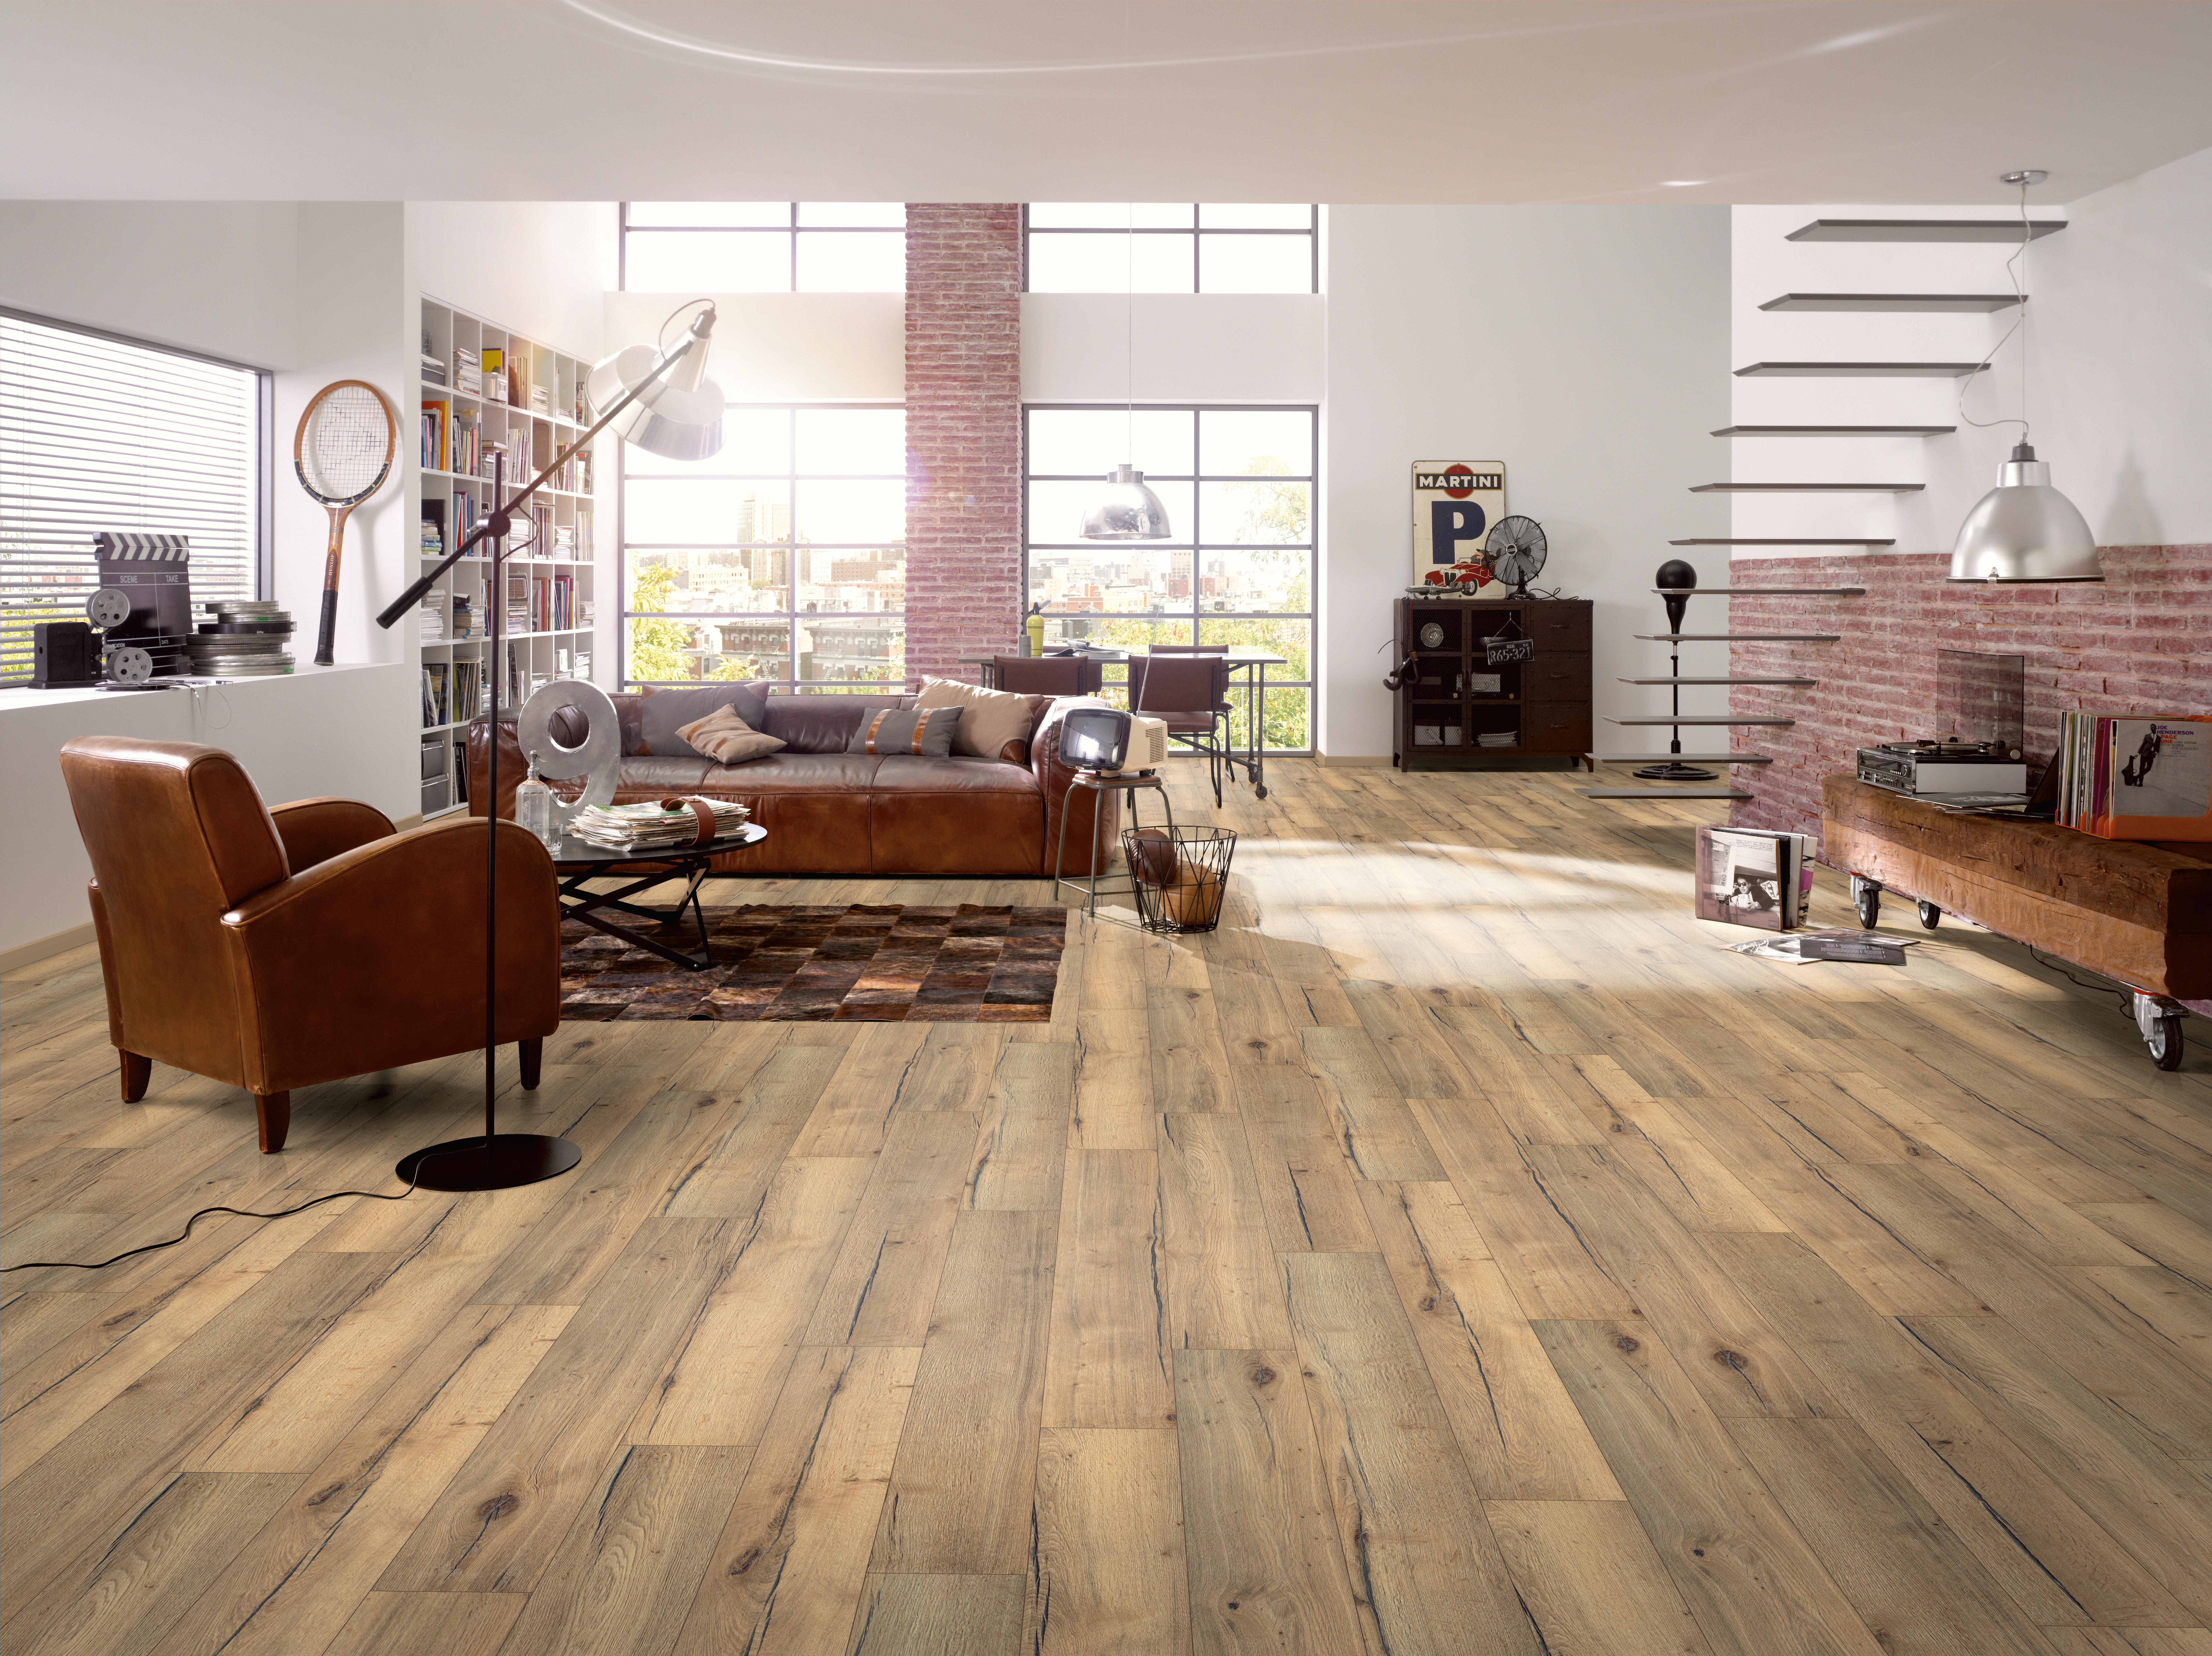 EGGER Laminate flooring promises high quality